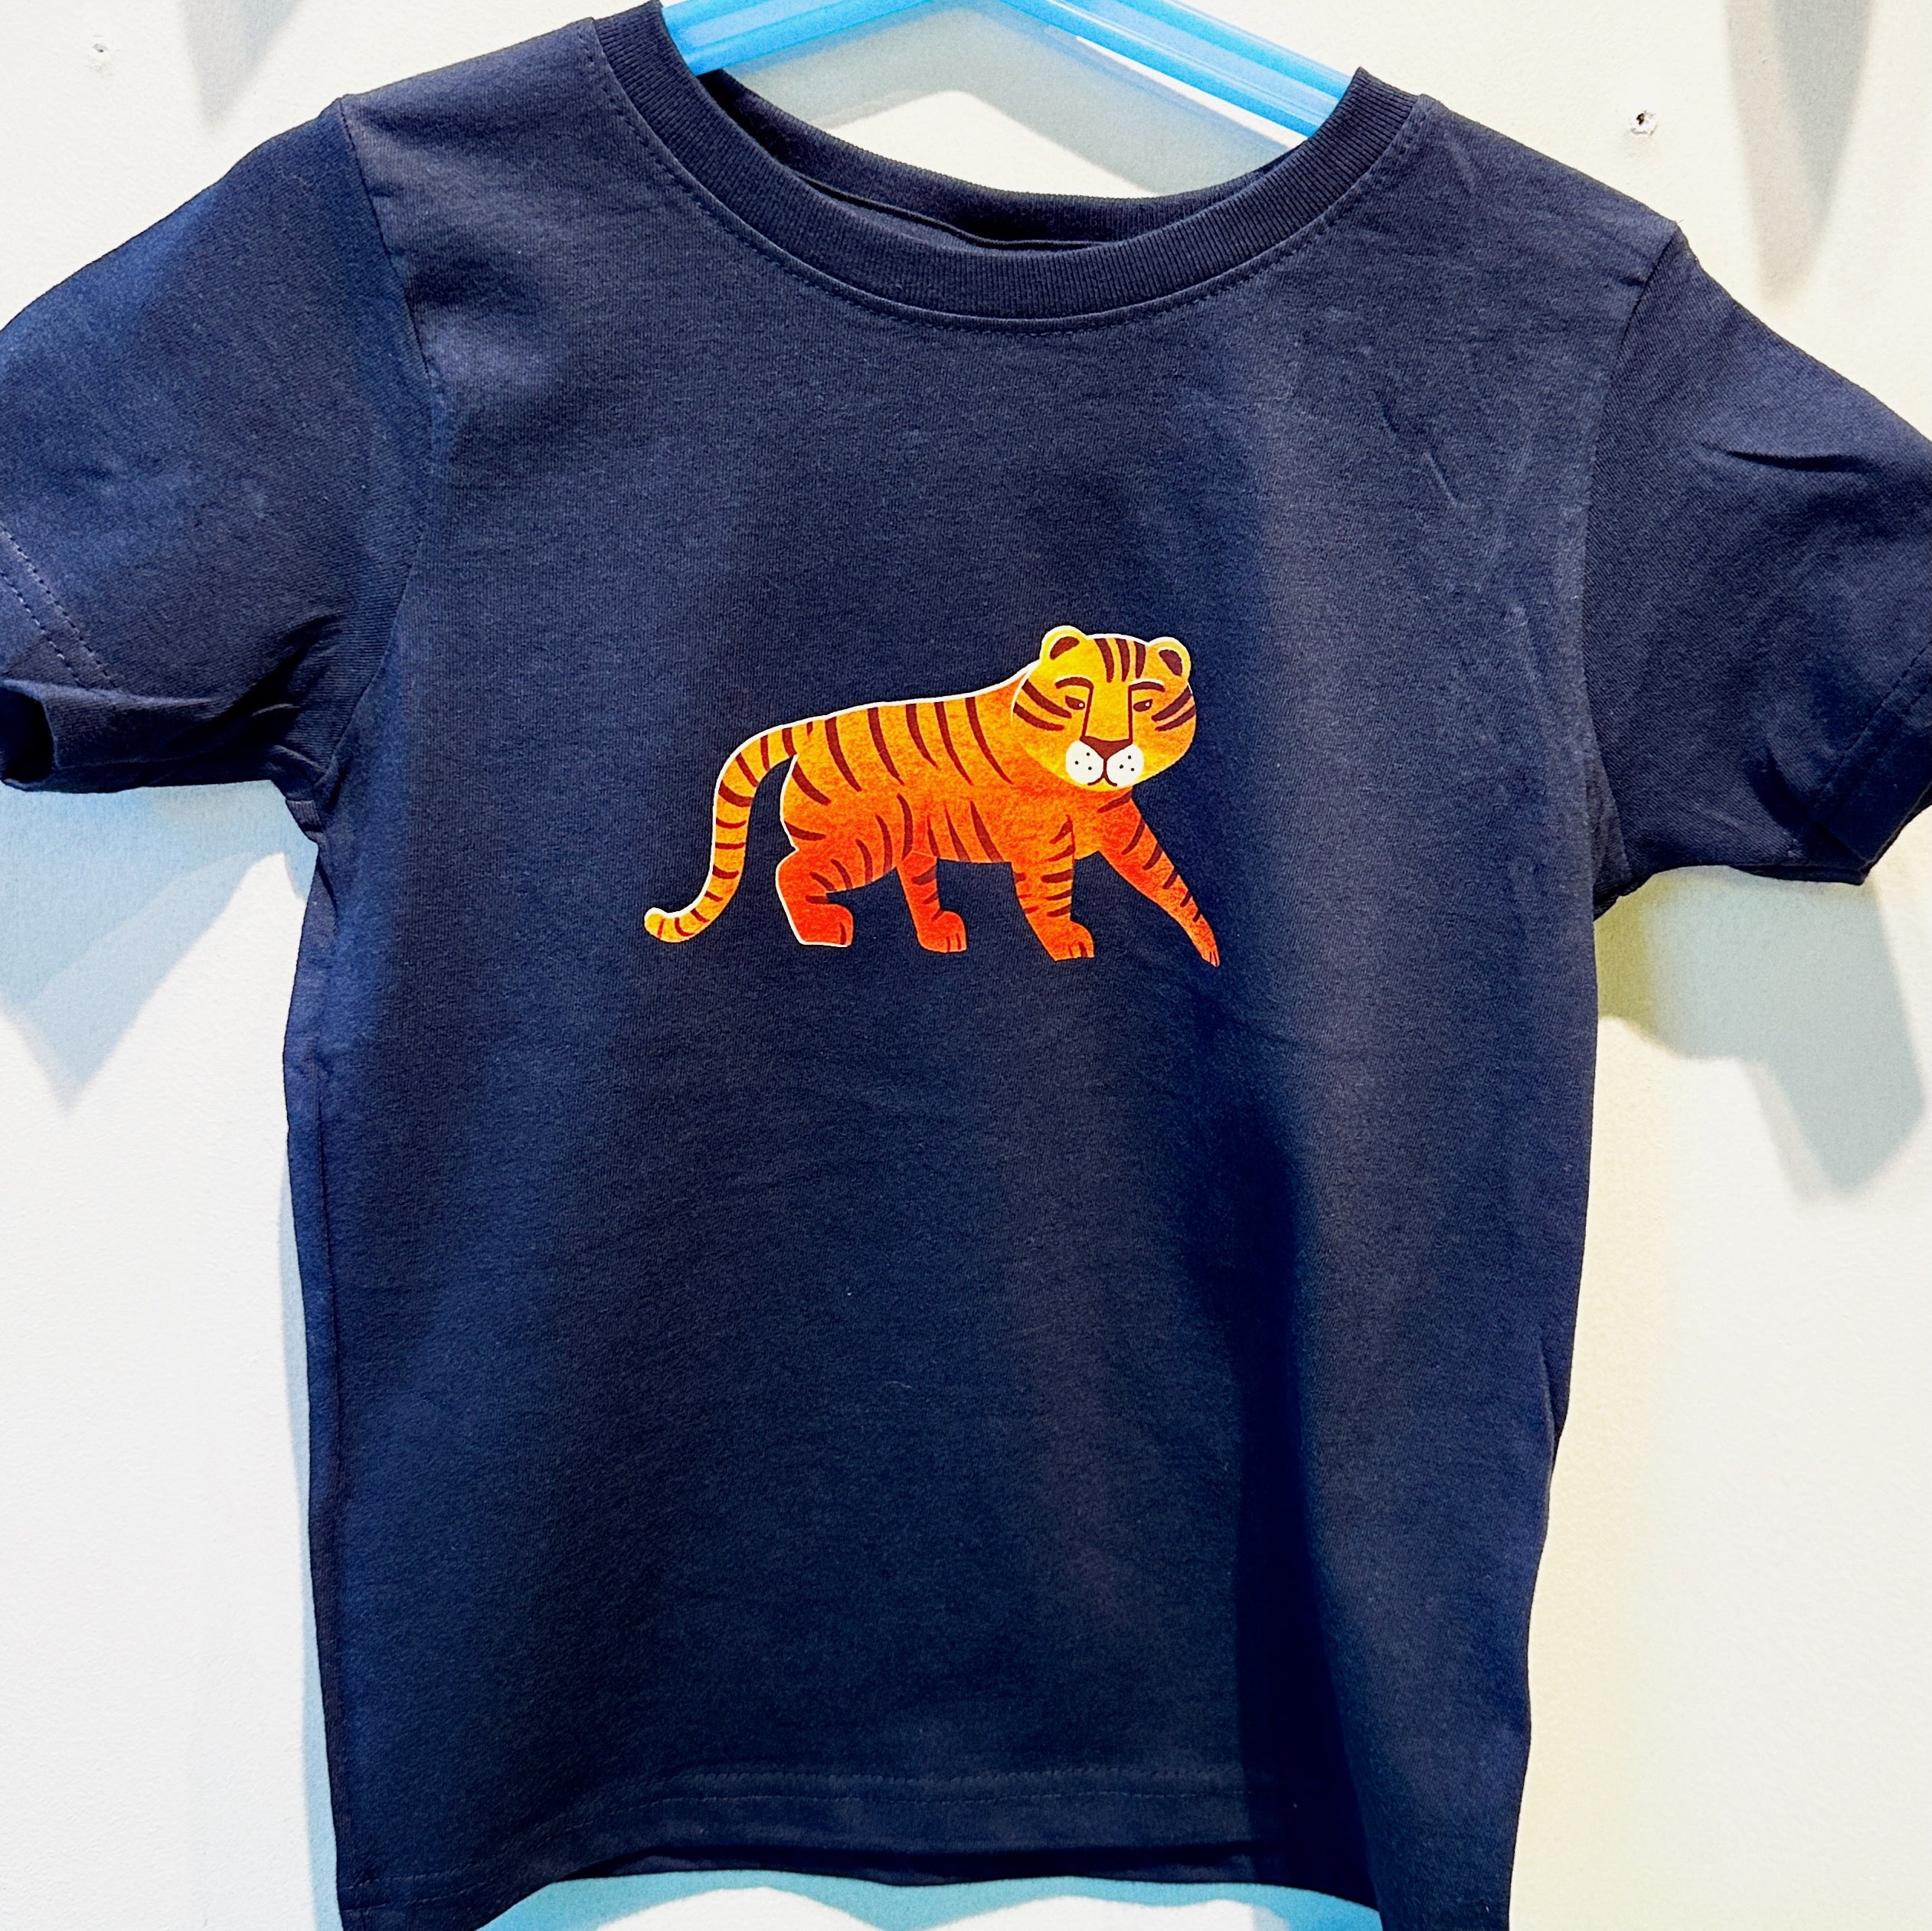 Children's t-shirt - The tiger